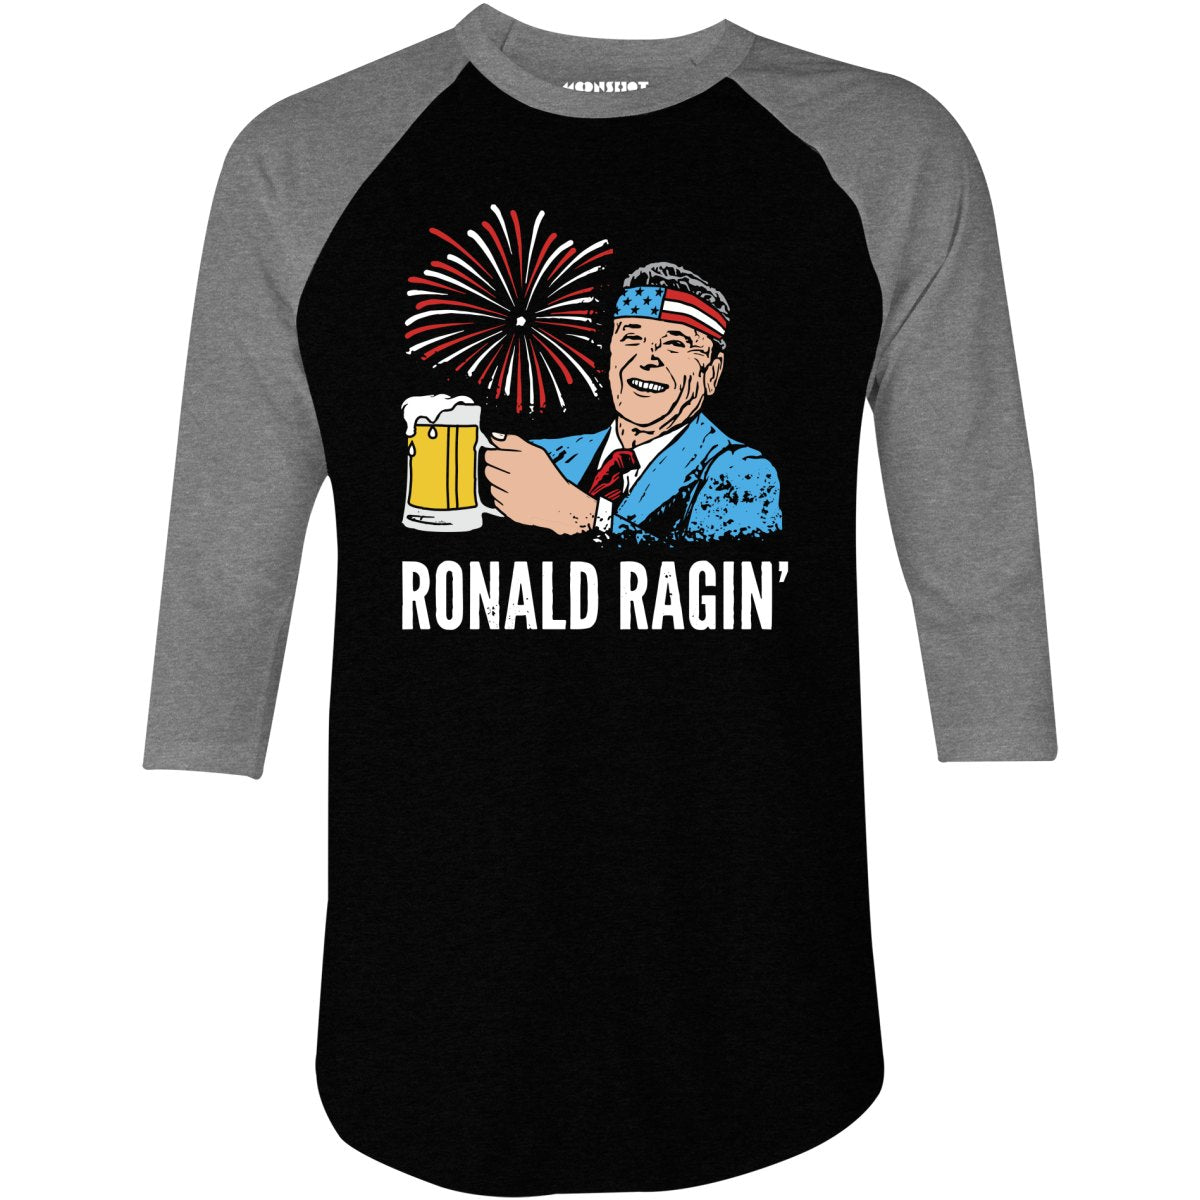 Ronald Ragin' - 3/4 Sleeve Raglan T-Shirt